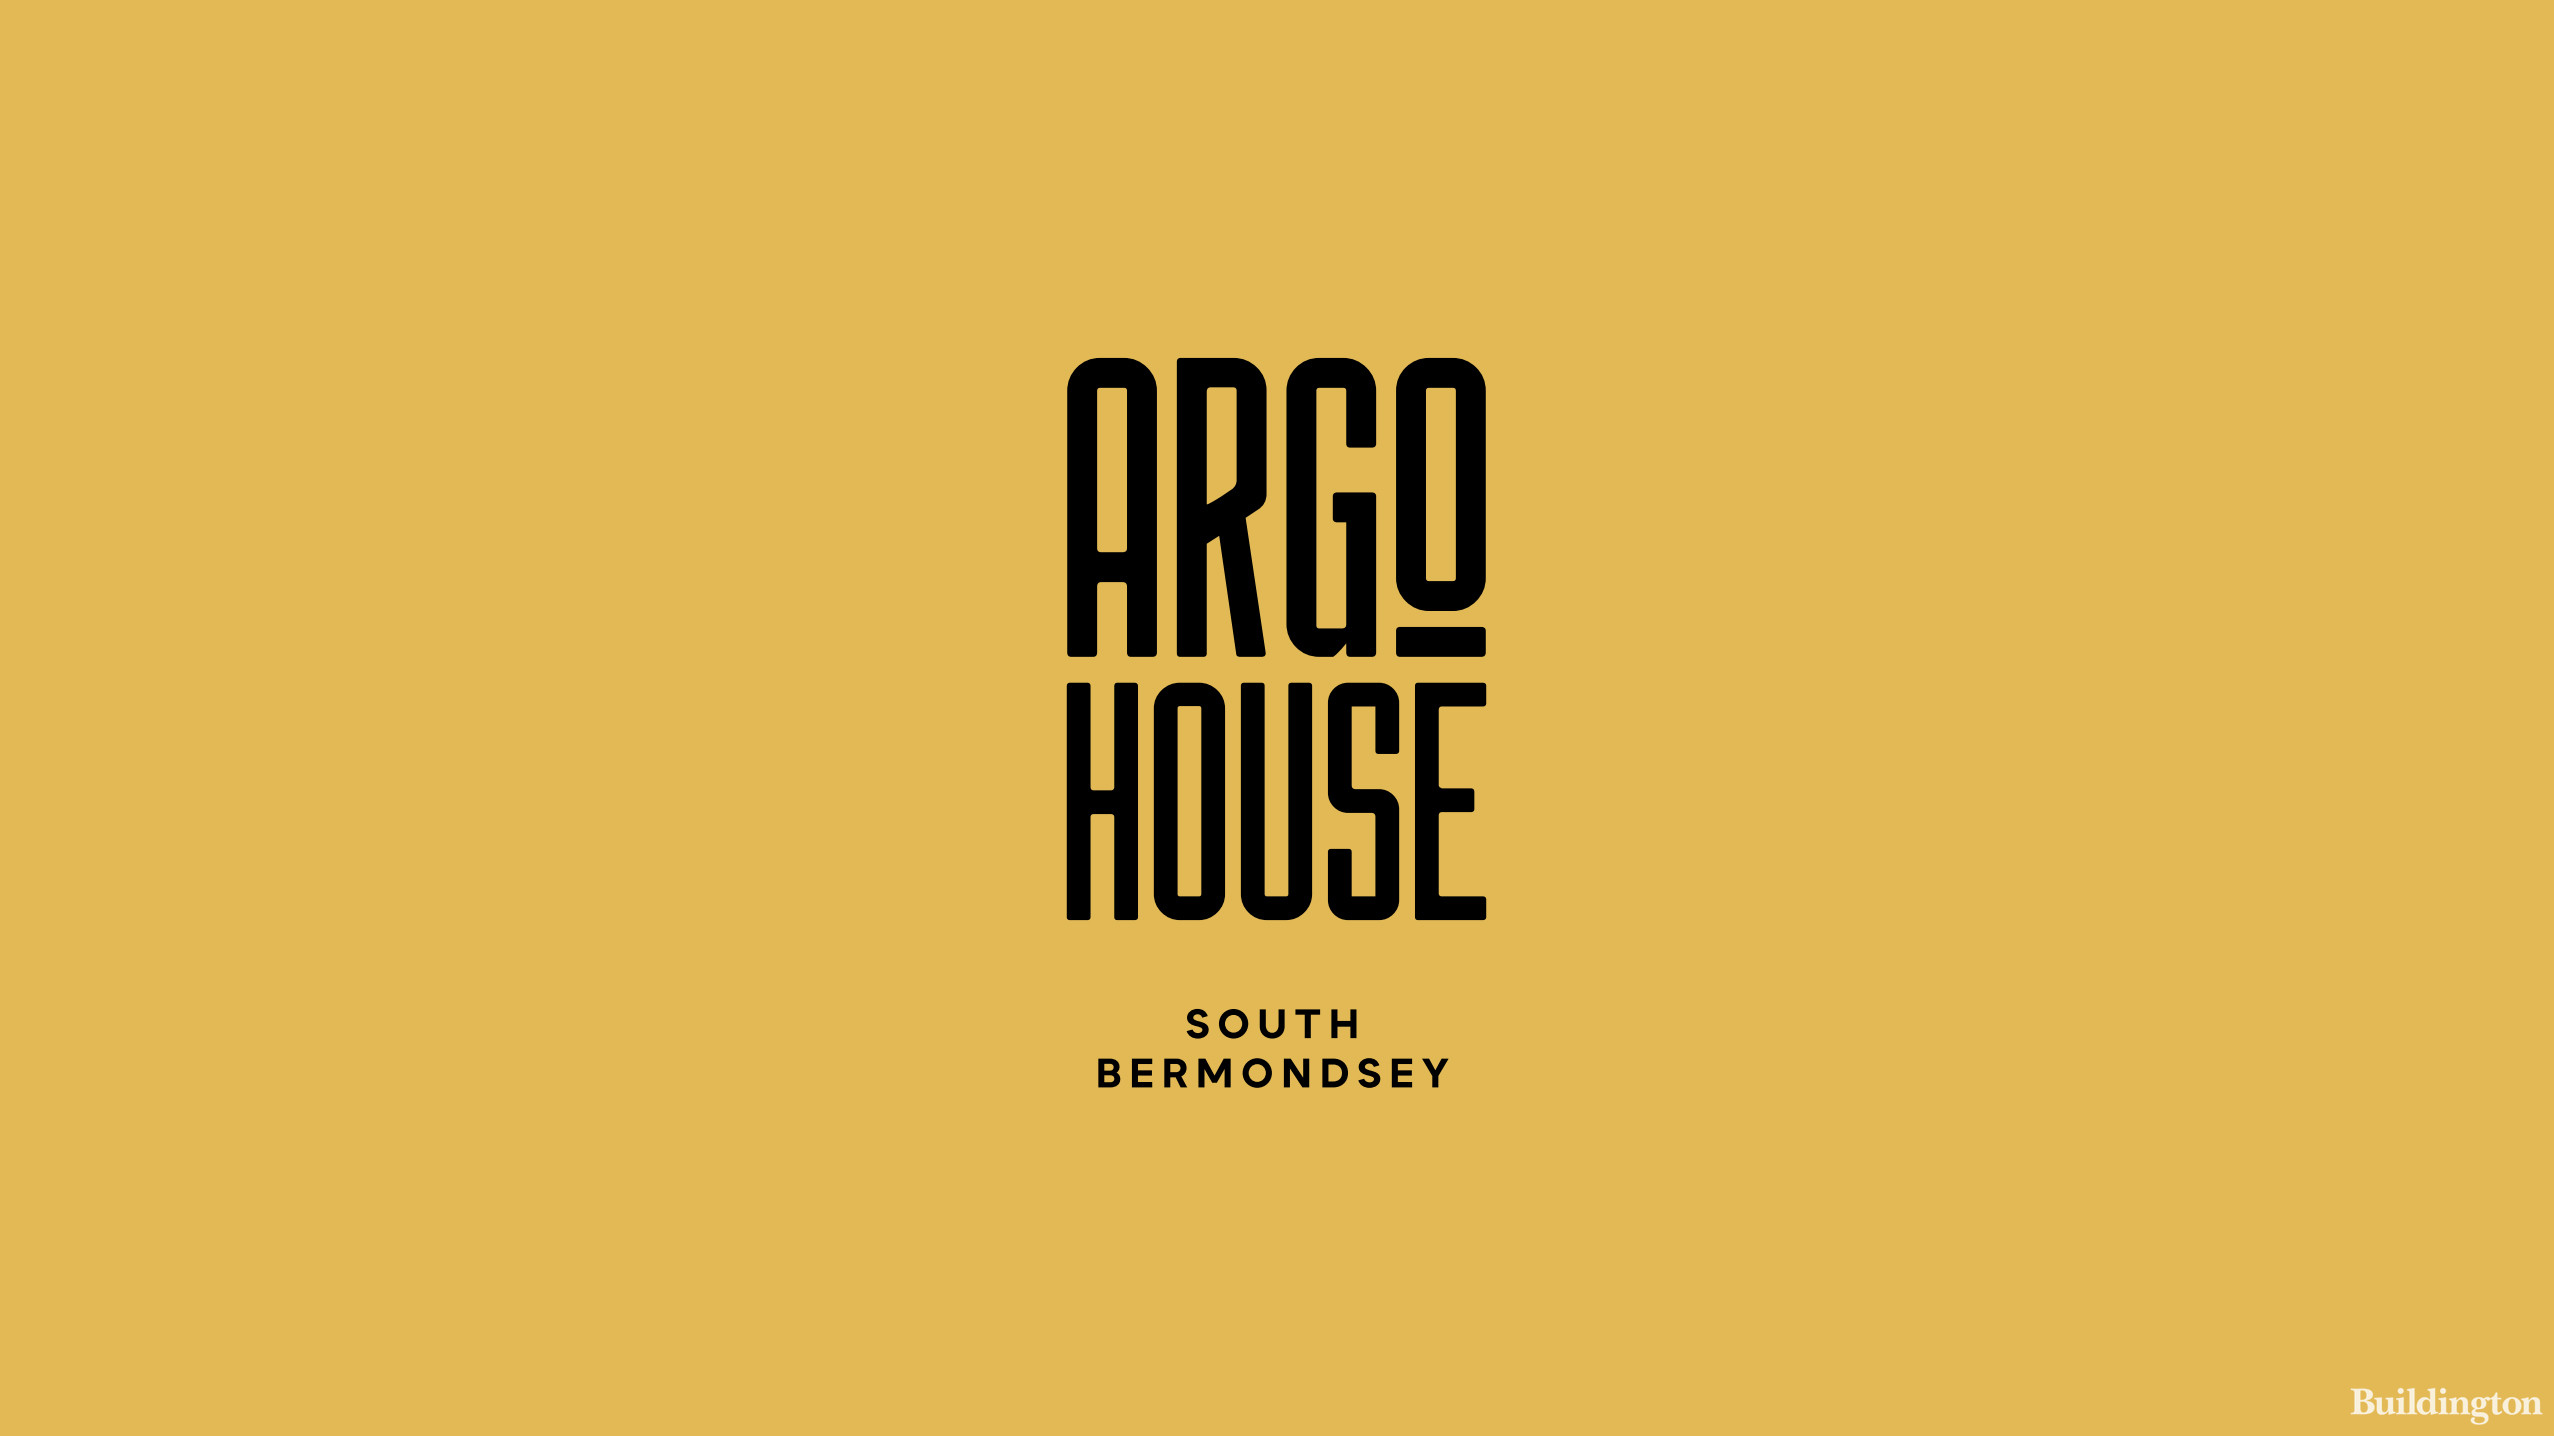 Argo House on Ilderton Road in South Bermondsey, London SE1.